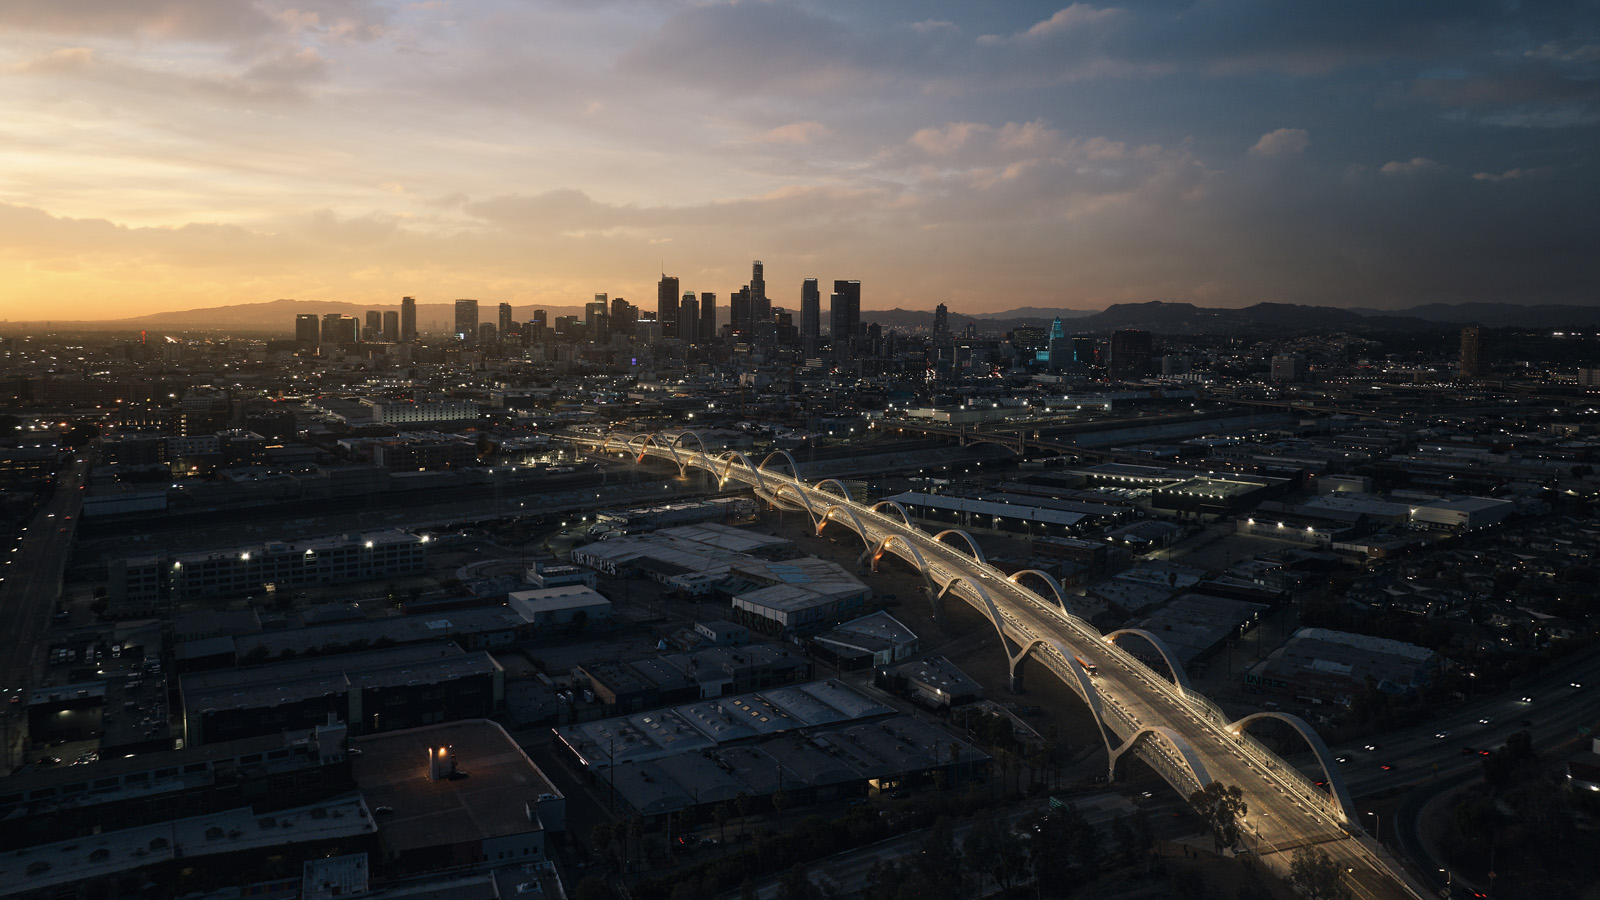 Kendrick Lamar Films New Music Video in Downtown L.A.: Photo